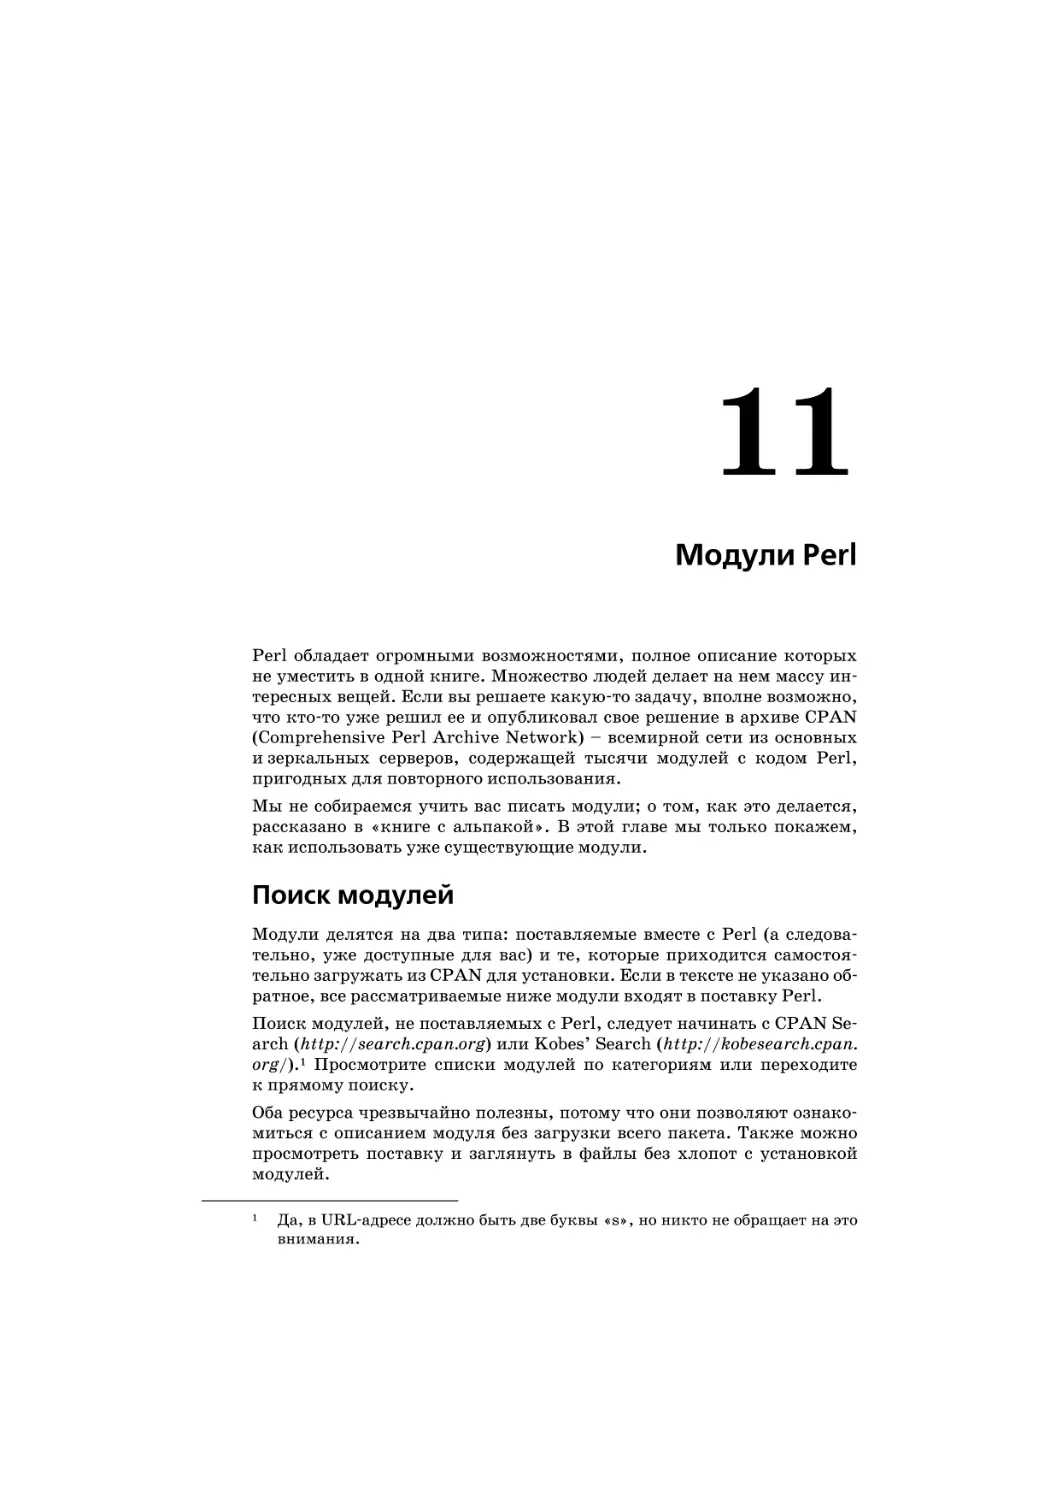 Глава 11. Модули Perl
Поиск модулей